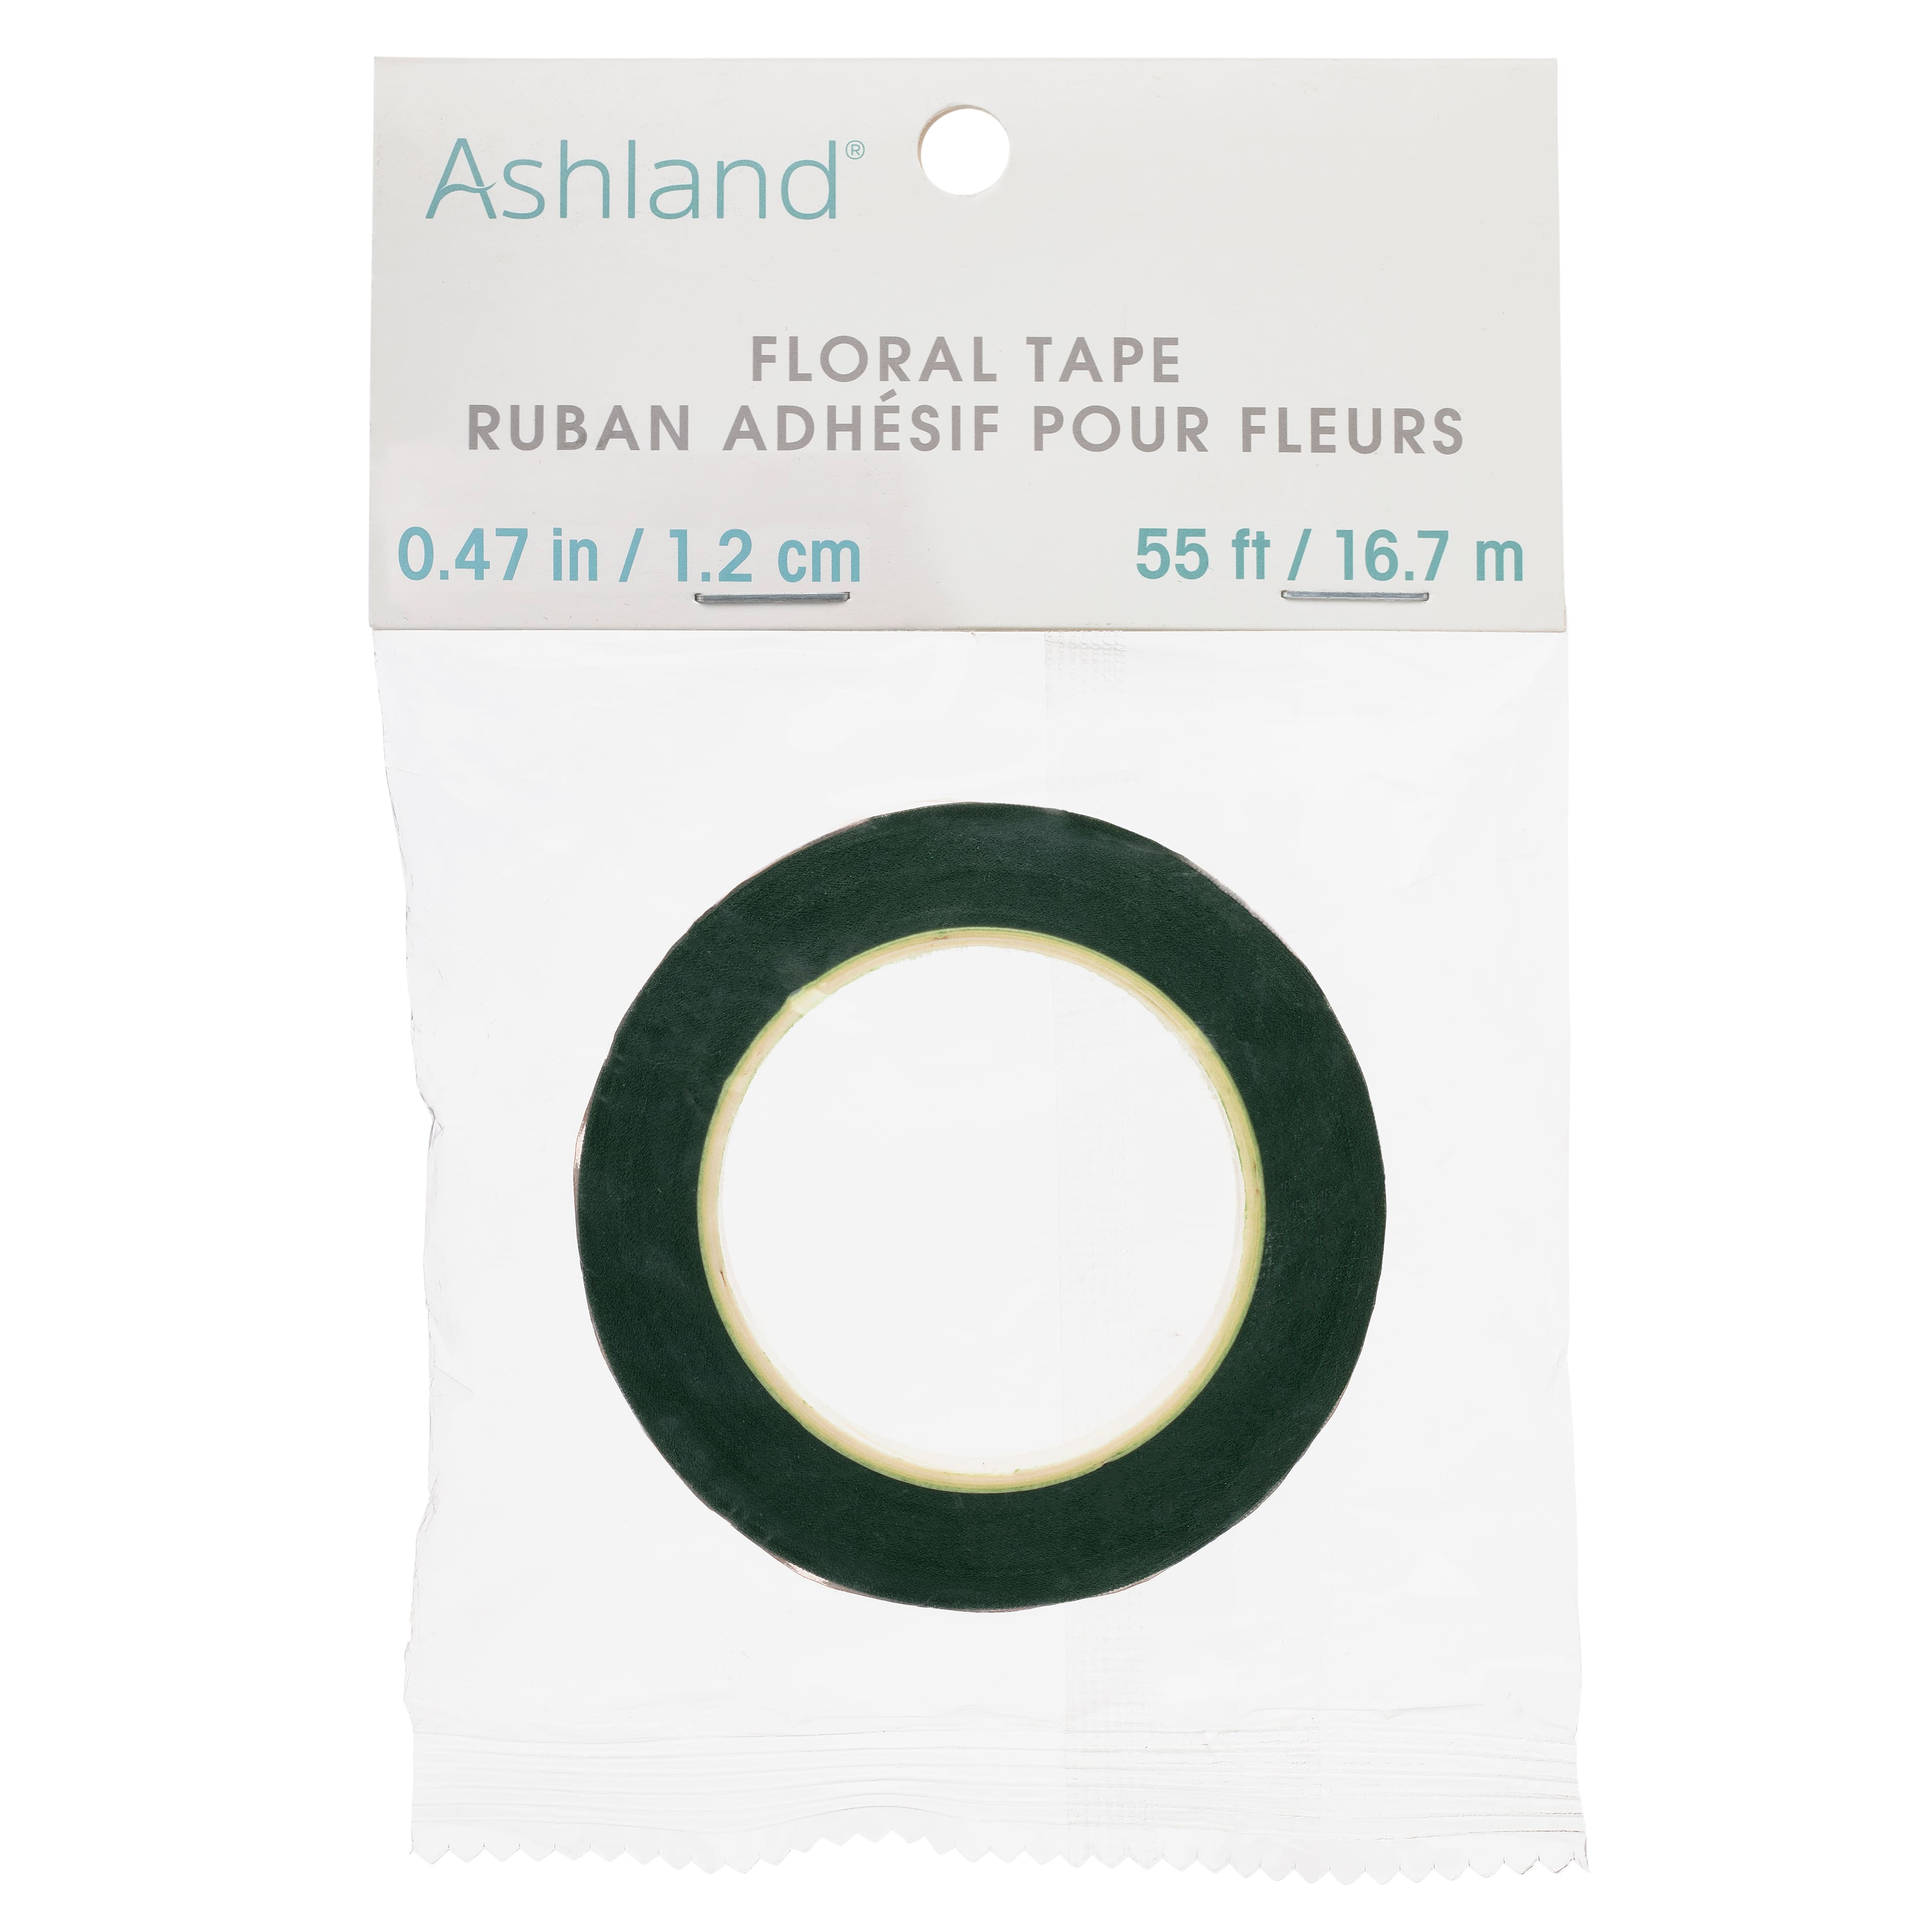 Ashland Floral Tape - Each